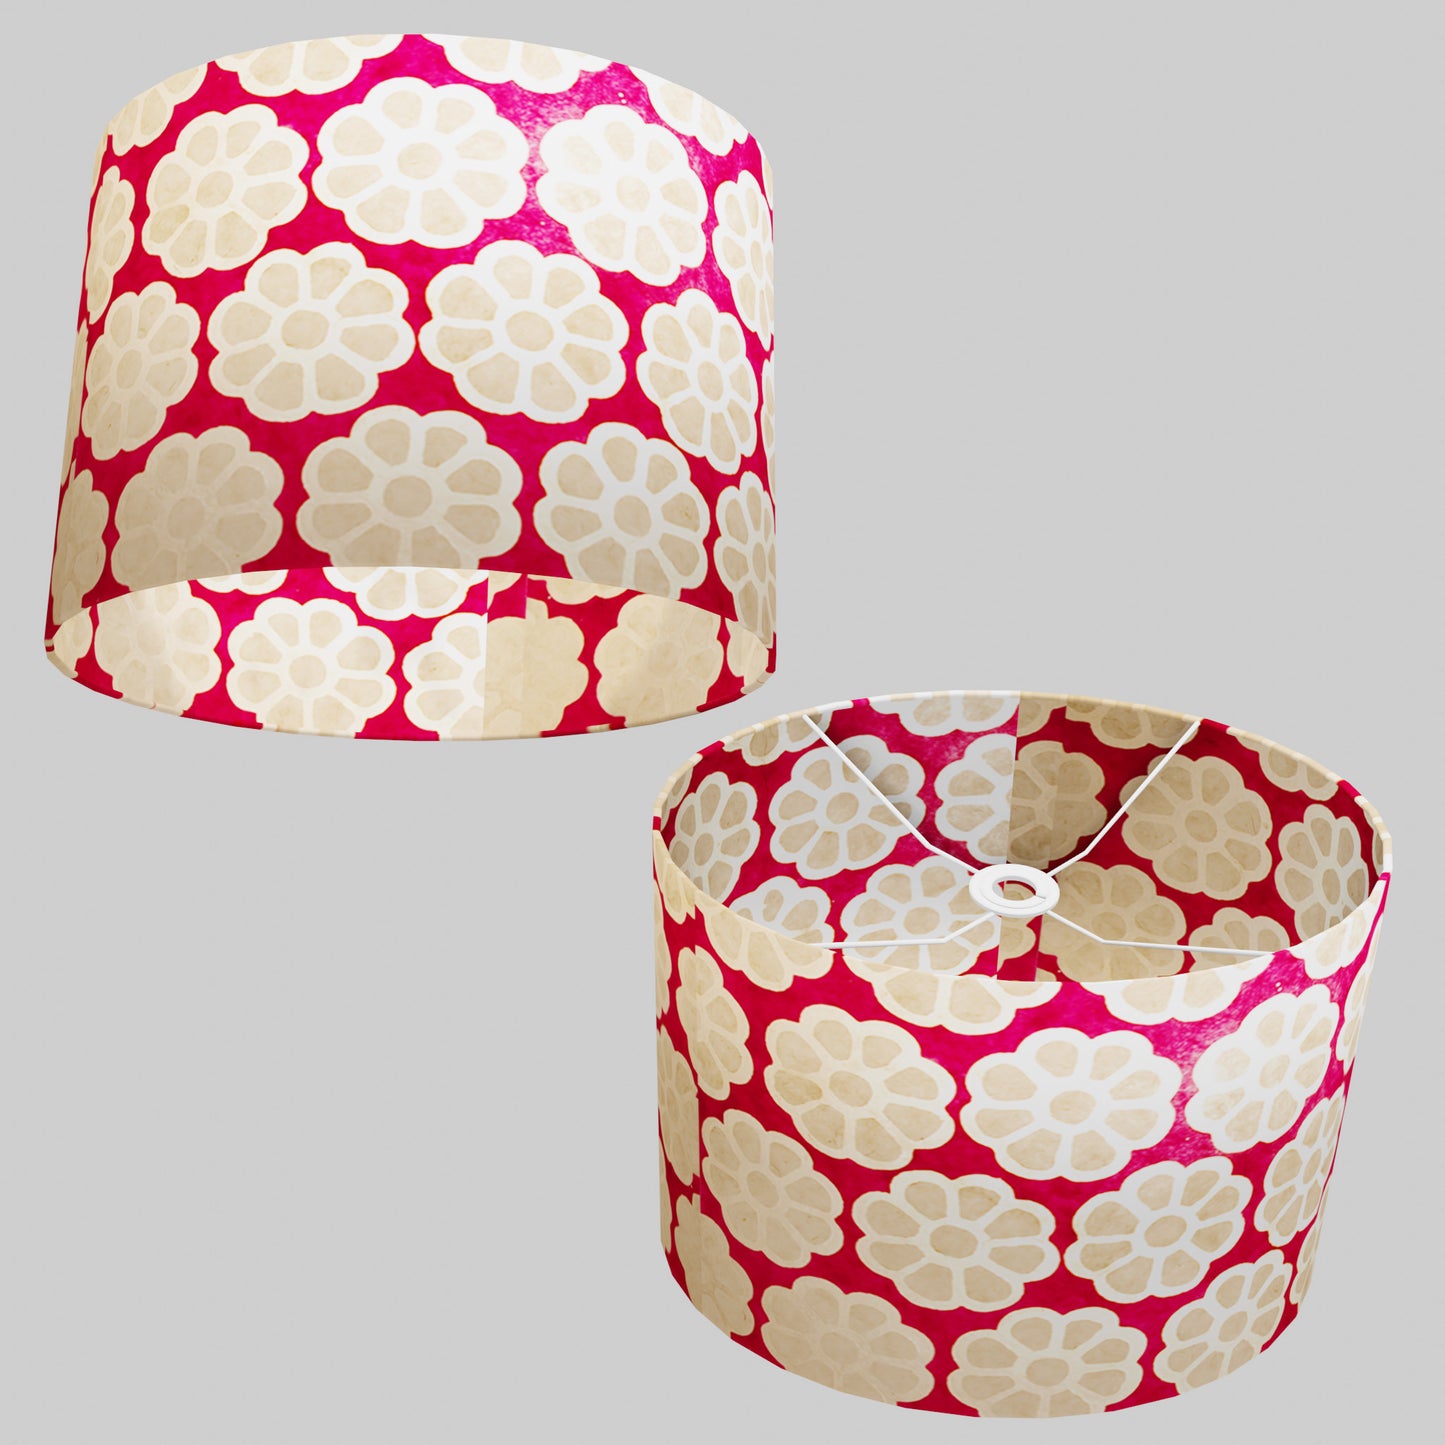 Oval Lamp Shade - P22 - Batik Big Flower on Hot Pink, 40cm(w) x 30cm(h) x 30cm(d)